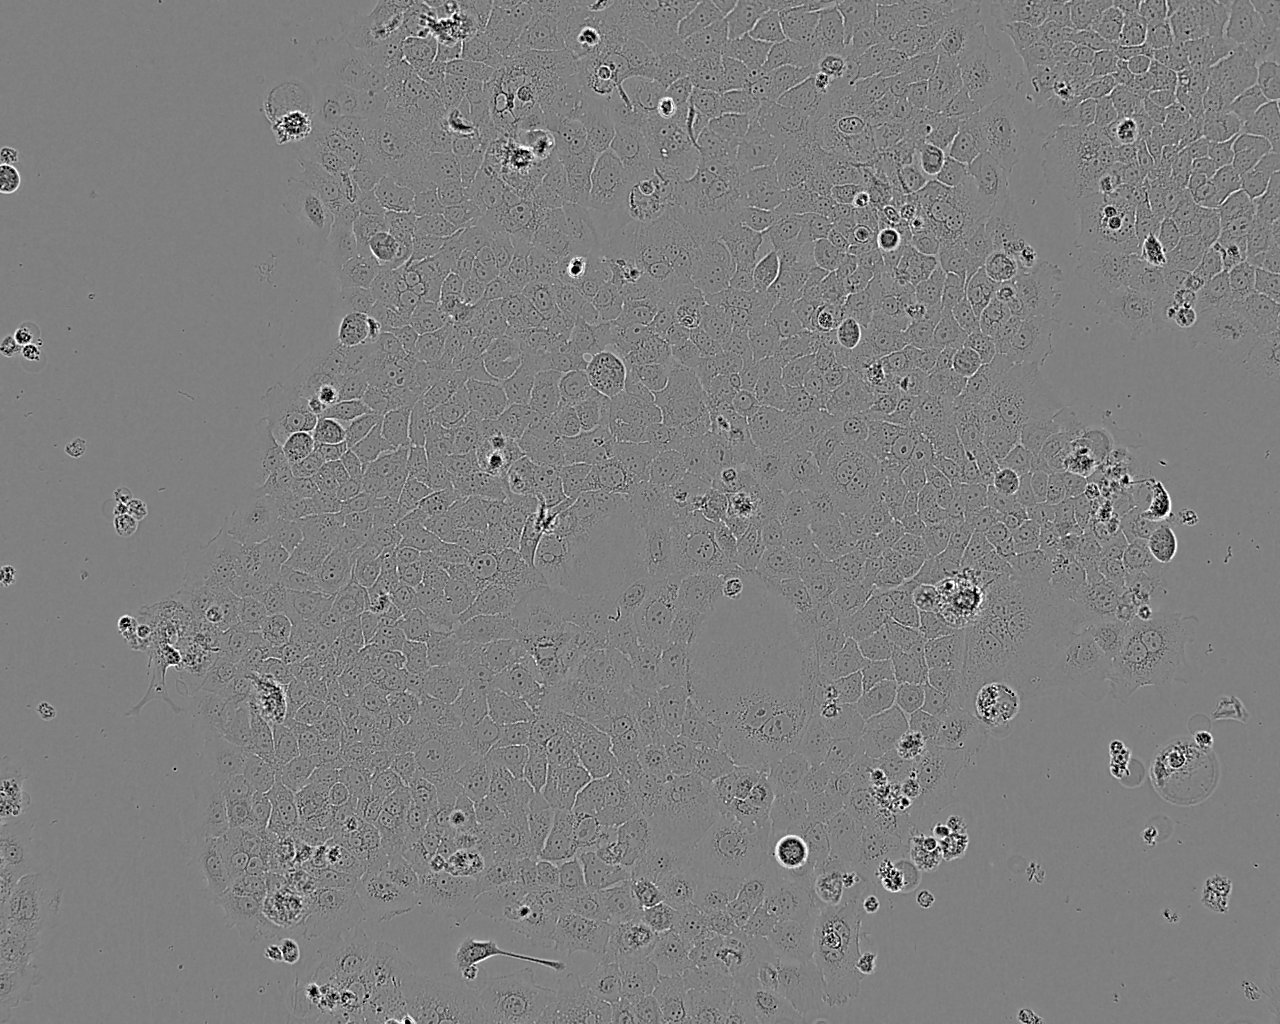 NCI-H2009 Cell:人肺腺癌细胞系,NCI-H2009 Cell